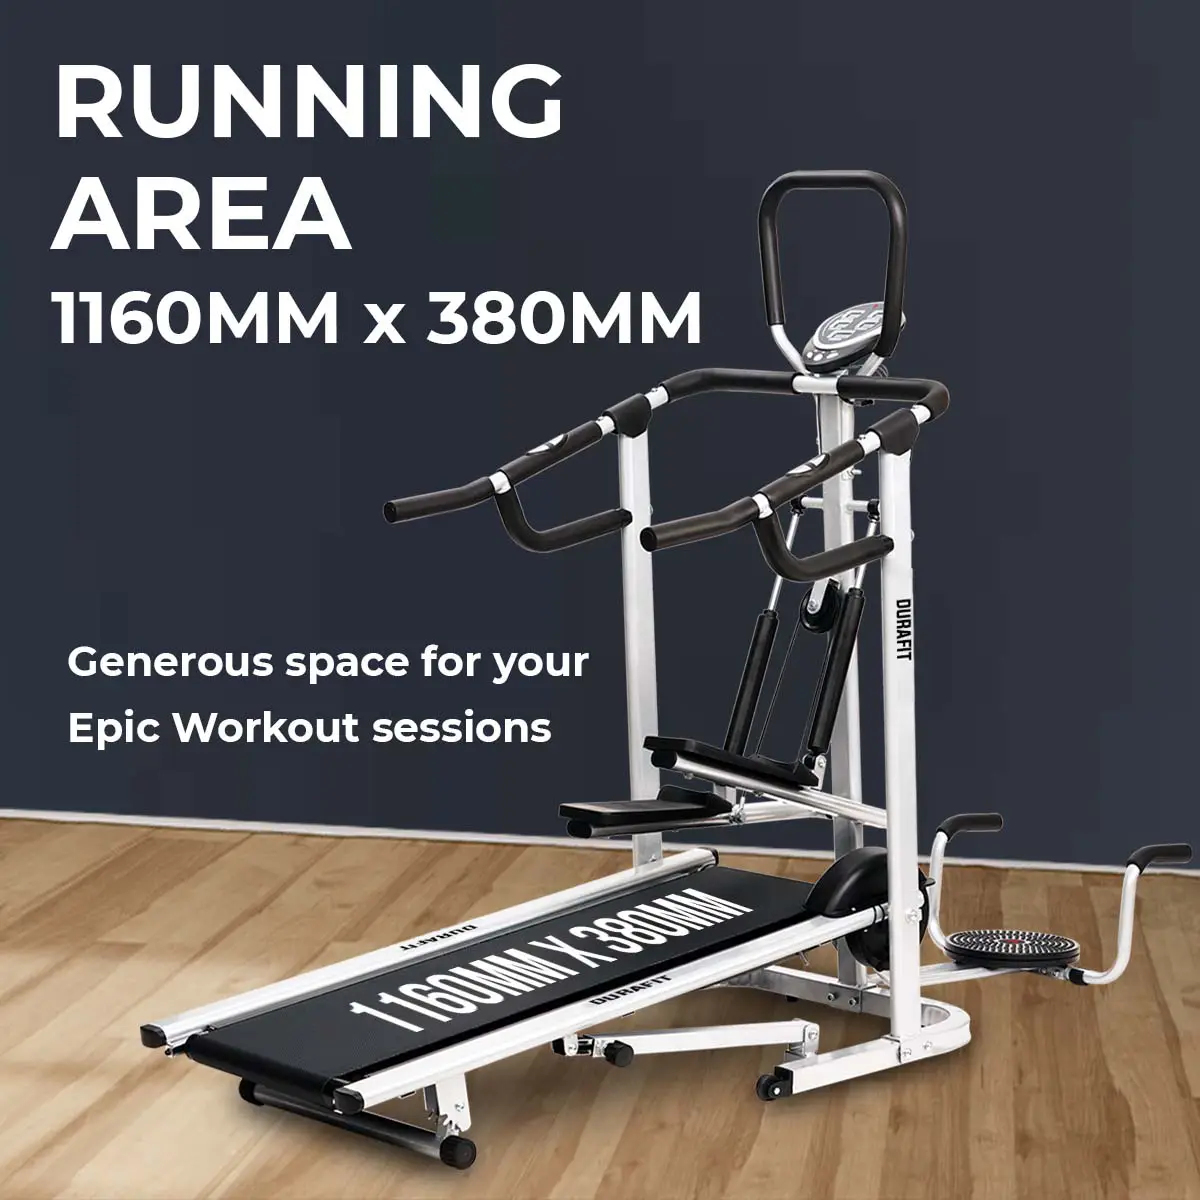 Durafit Manual Treadmill Hmtm1 with larger running area